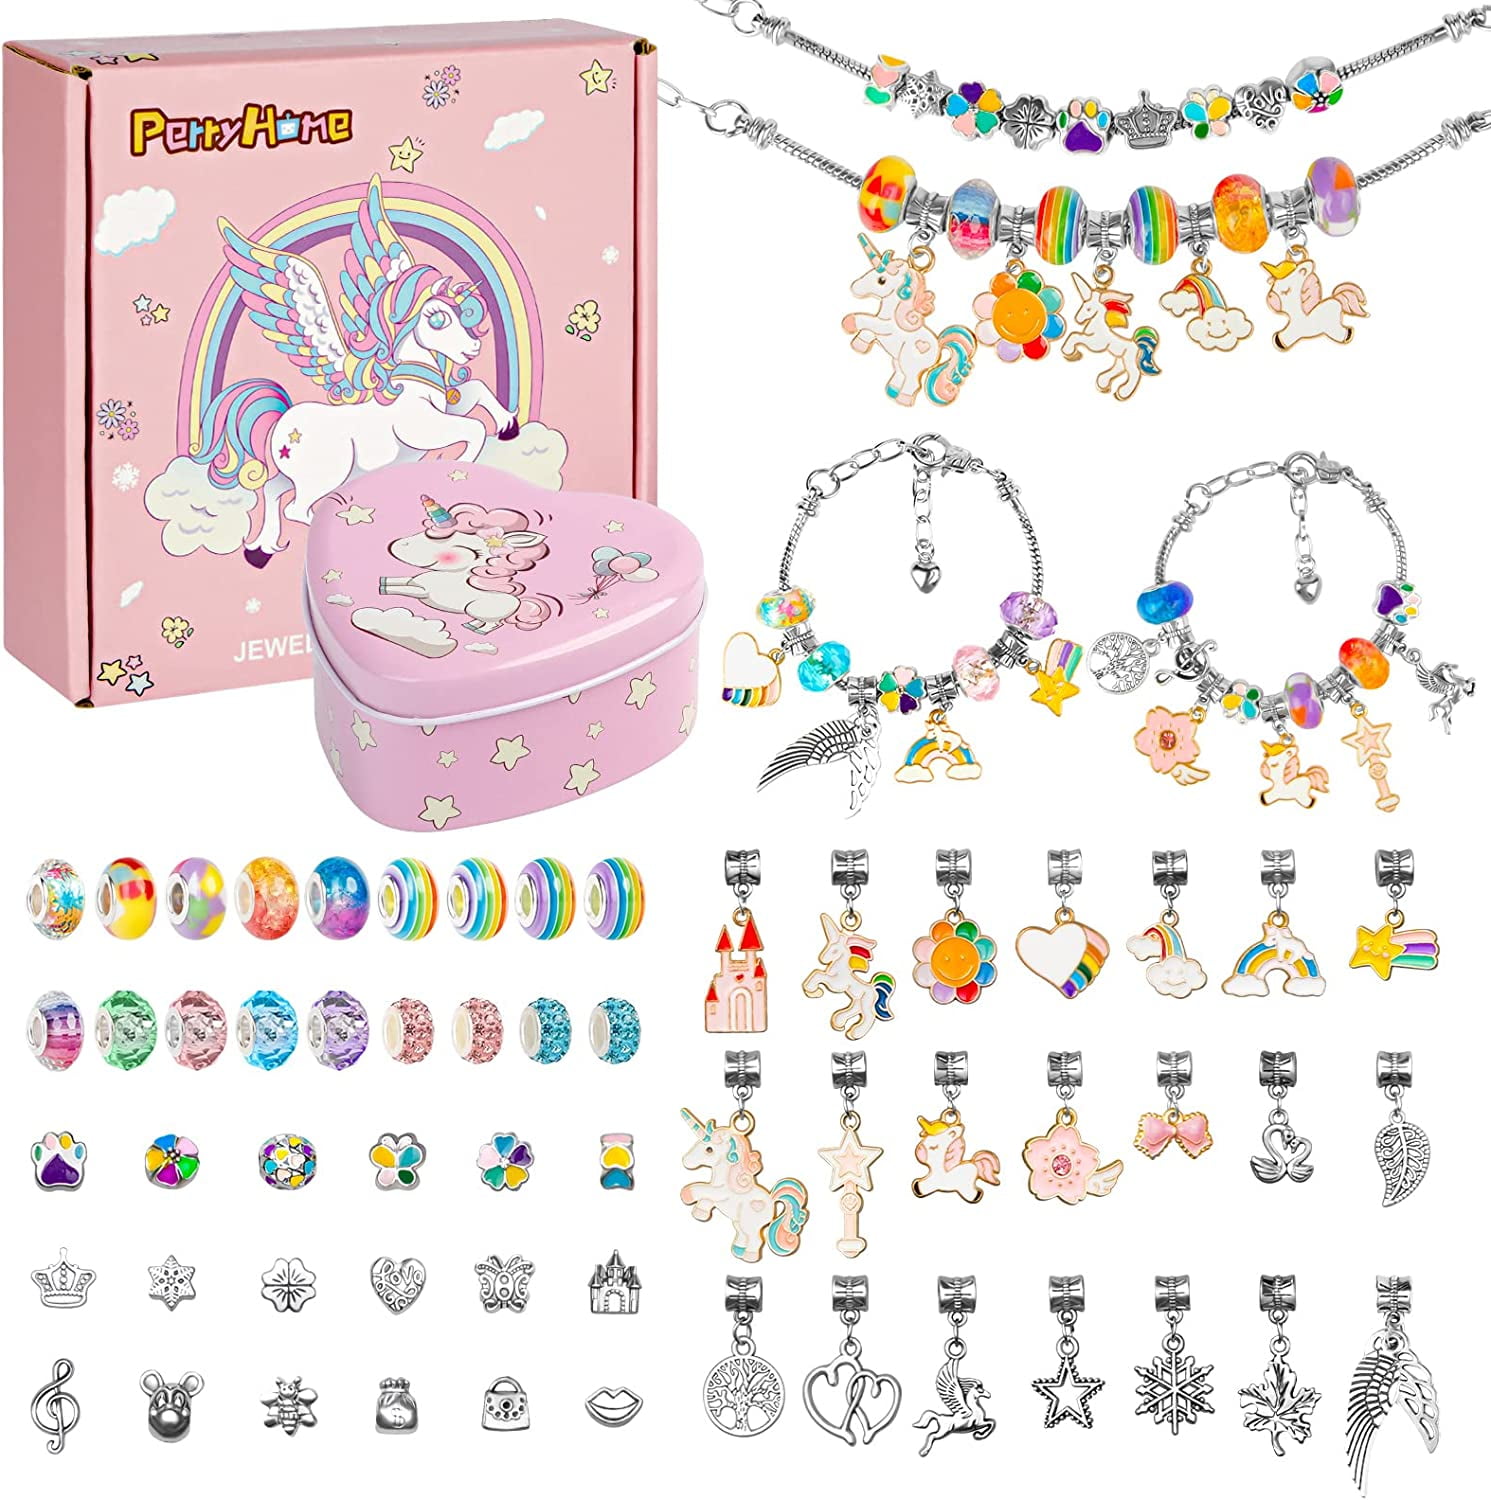  UFU Charm Bracelet Making Kit Girls Beads for Jewelry Making  Kit, Unicorns Arts Crafts Gifts Set for Teen Girls Age 5 6 7 8-12, with a  Portable Bracelet Organizer Box